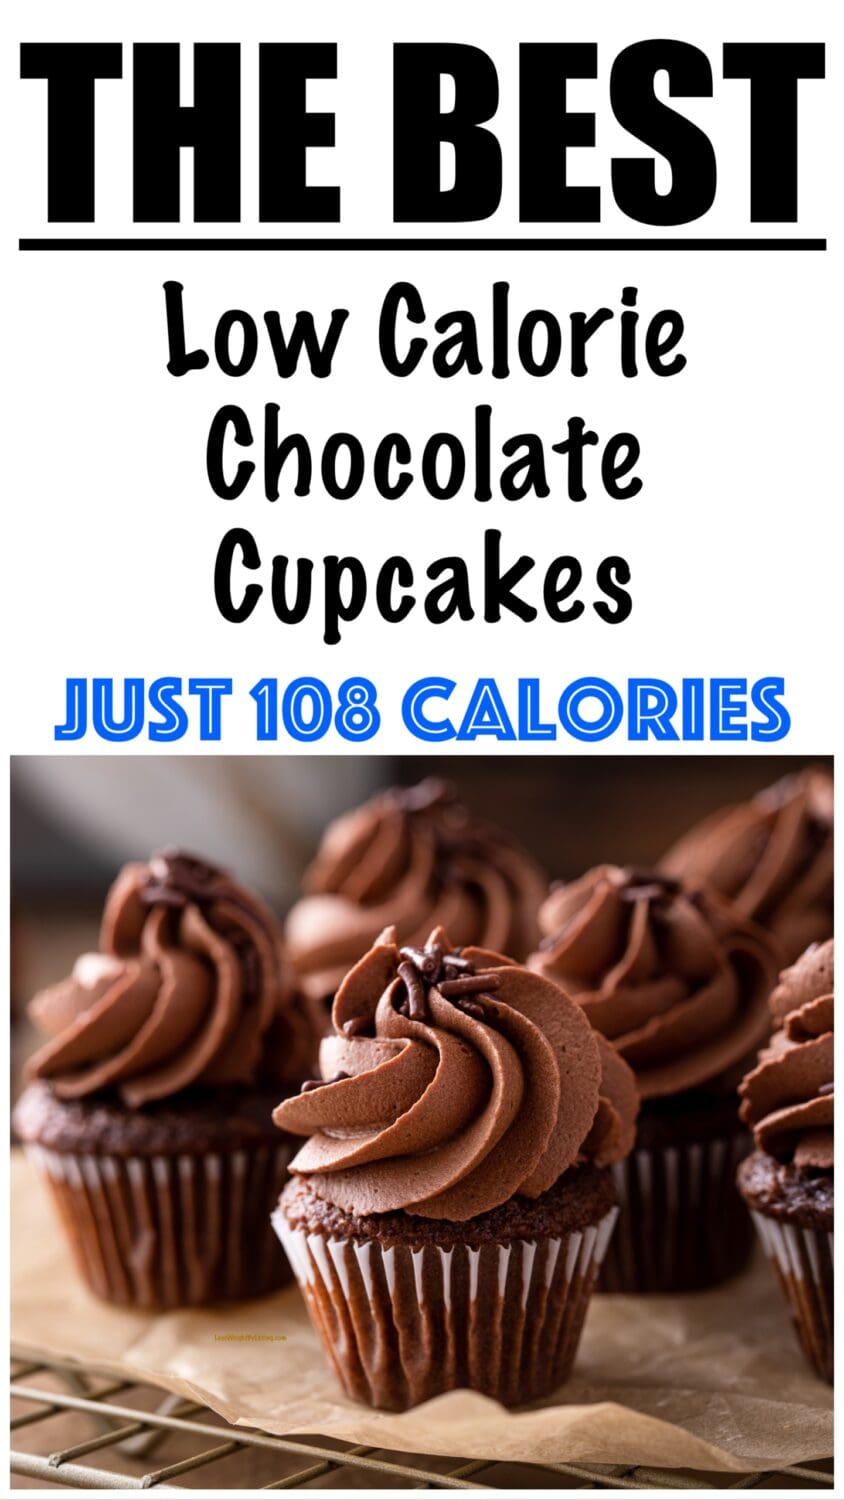 Low Calorie Chocolate Cupcakes Recipe